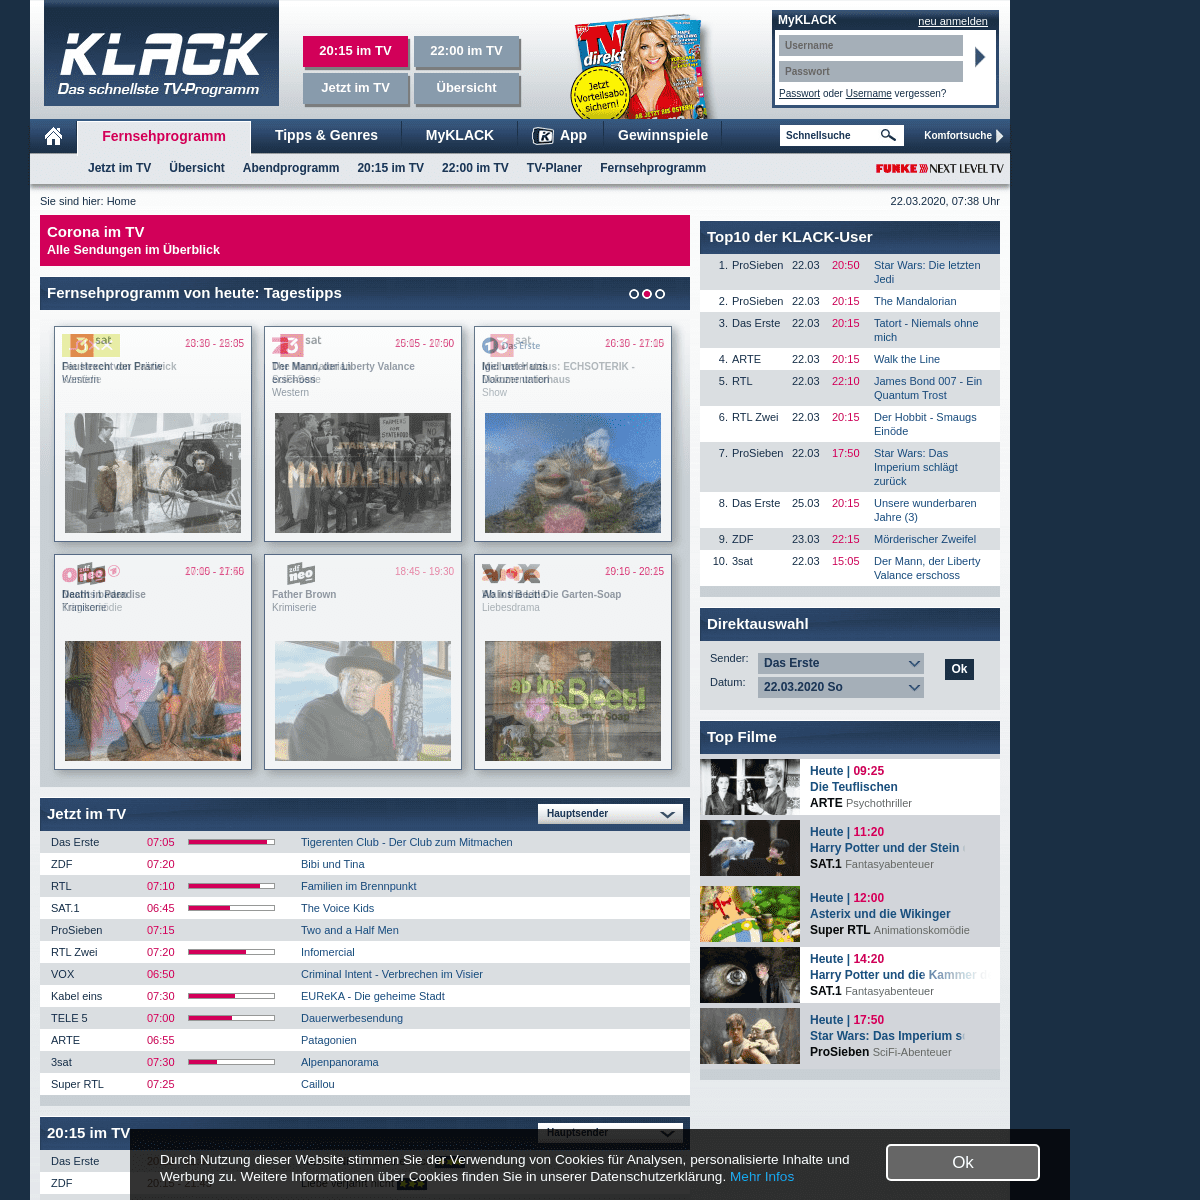 A complete backup of klack.de